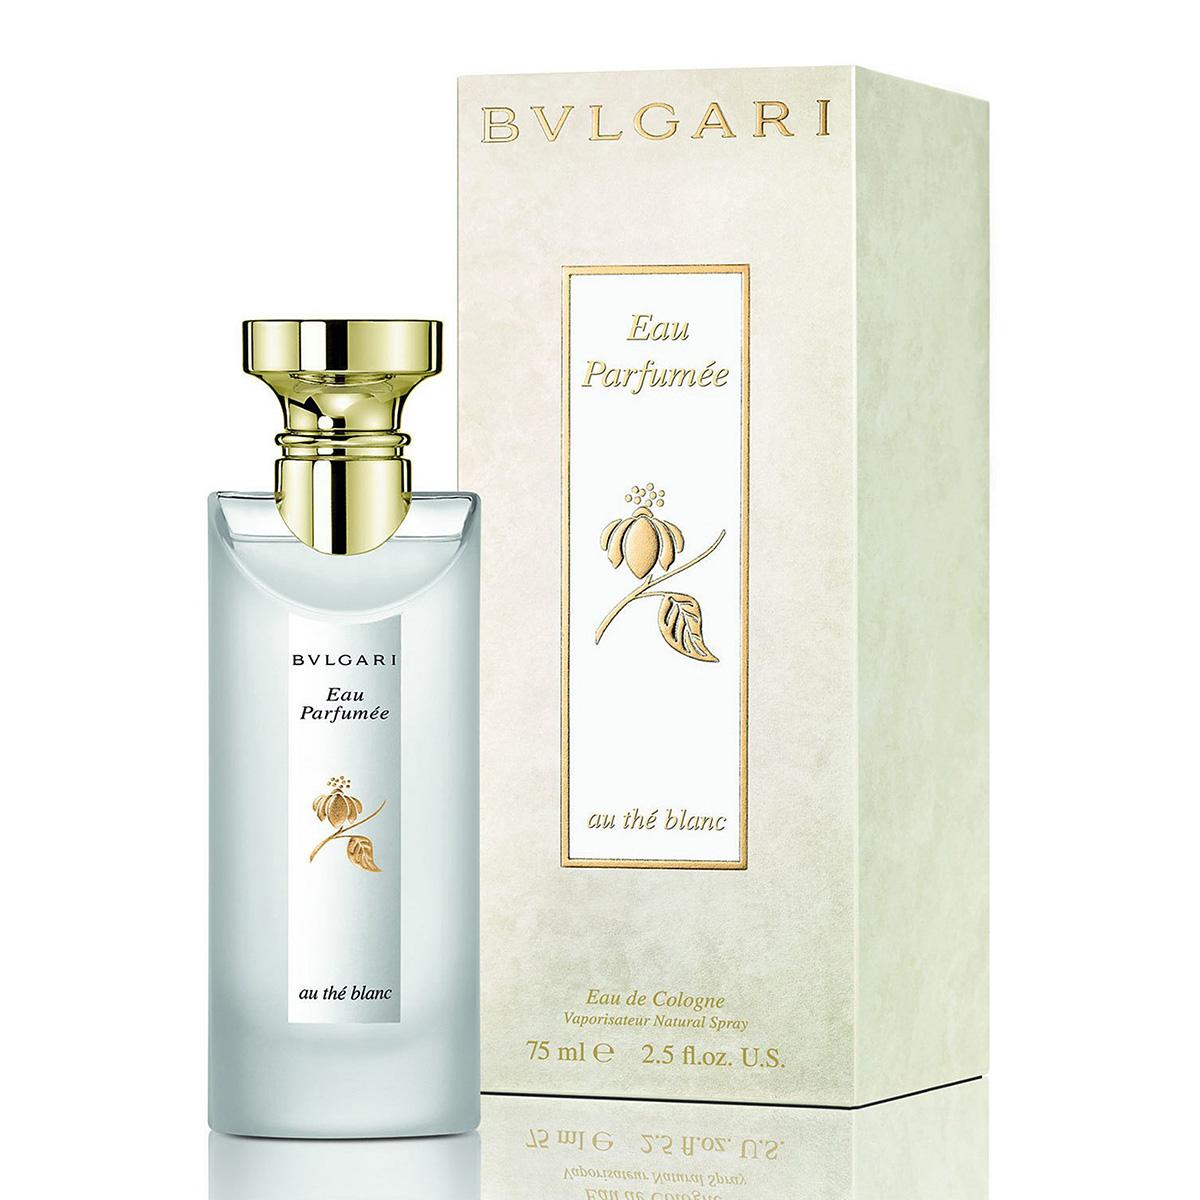 Free Bvlgari Eau Parfumee Au The Blanc Fragrance Sample